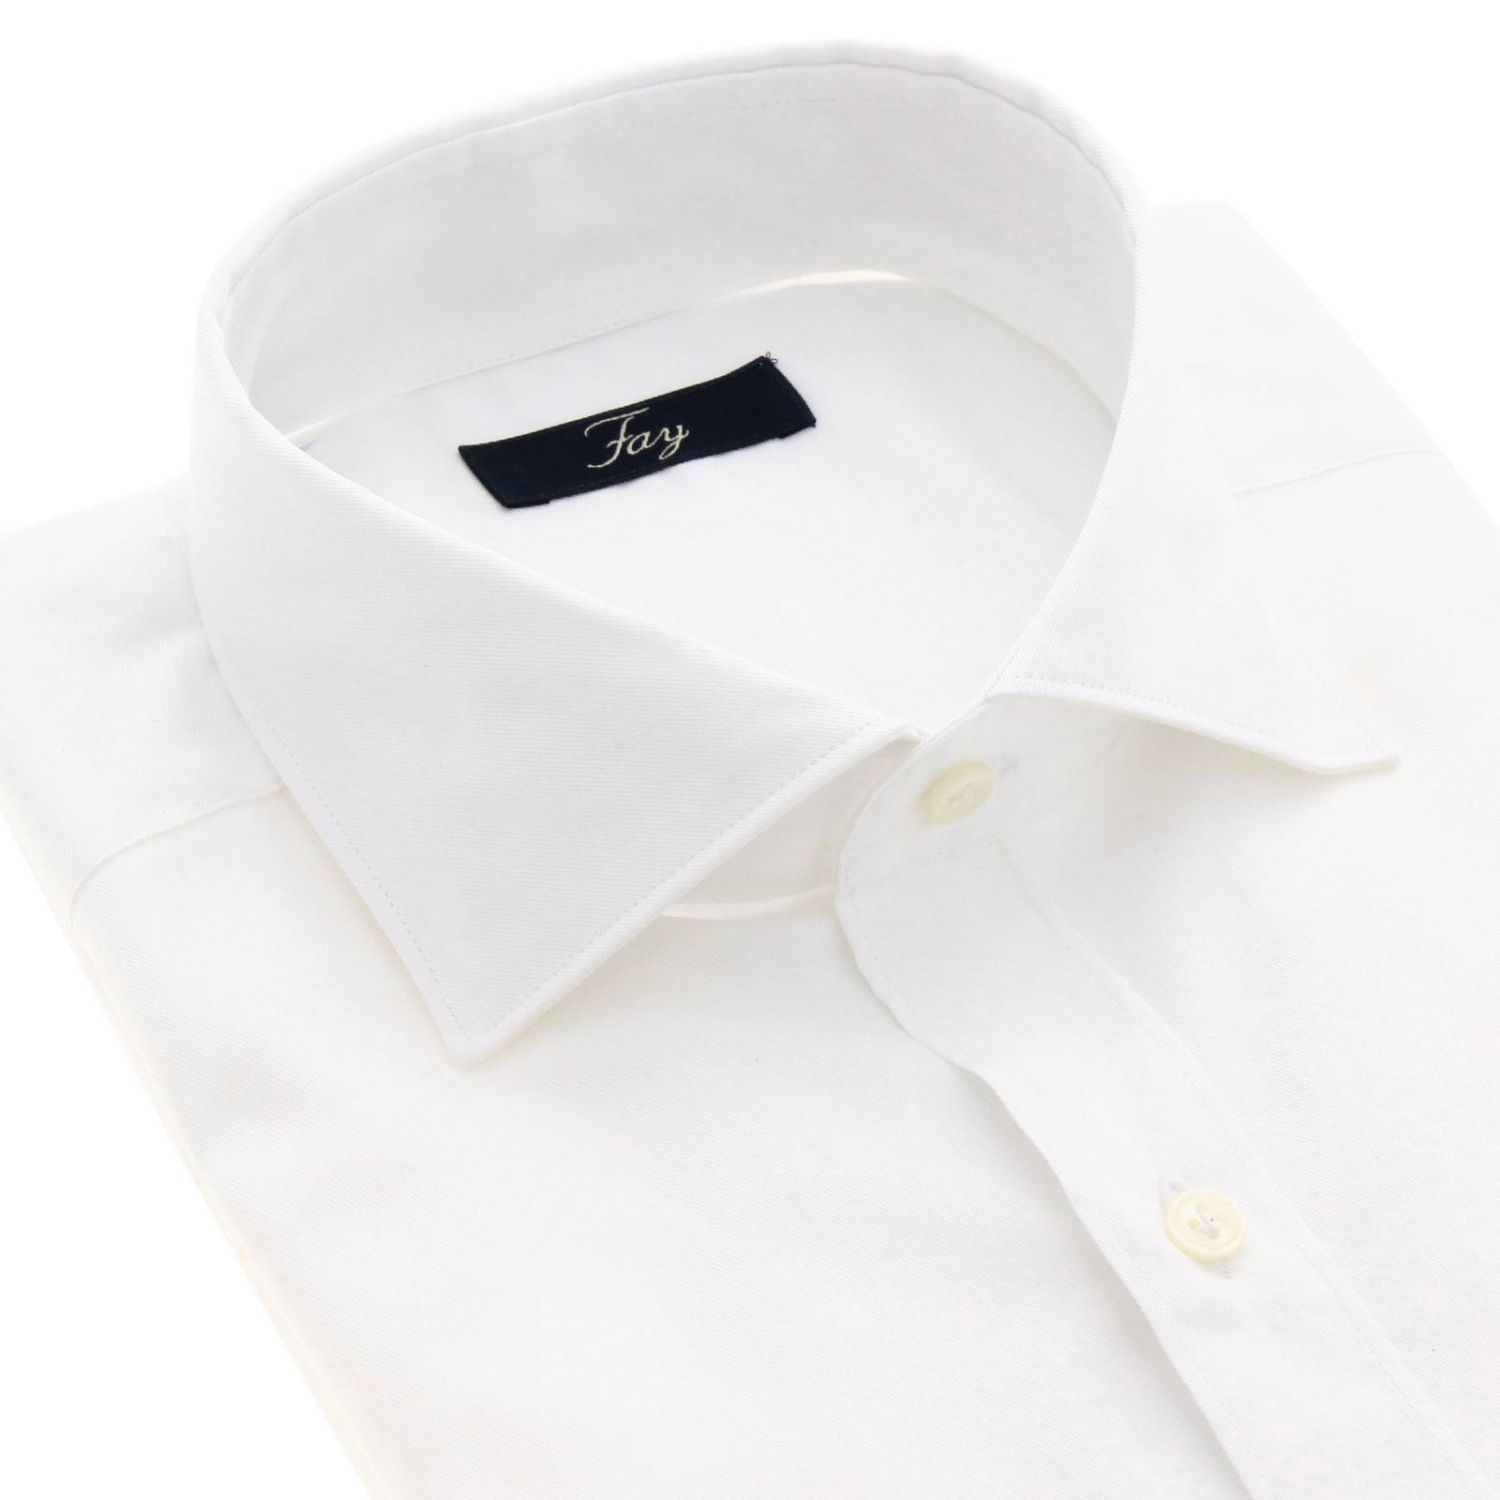 Shirt Fay: Fay shirt for man white 2